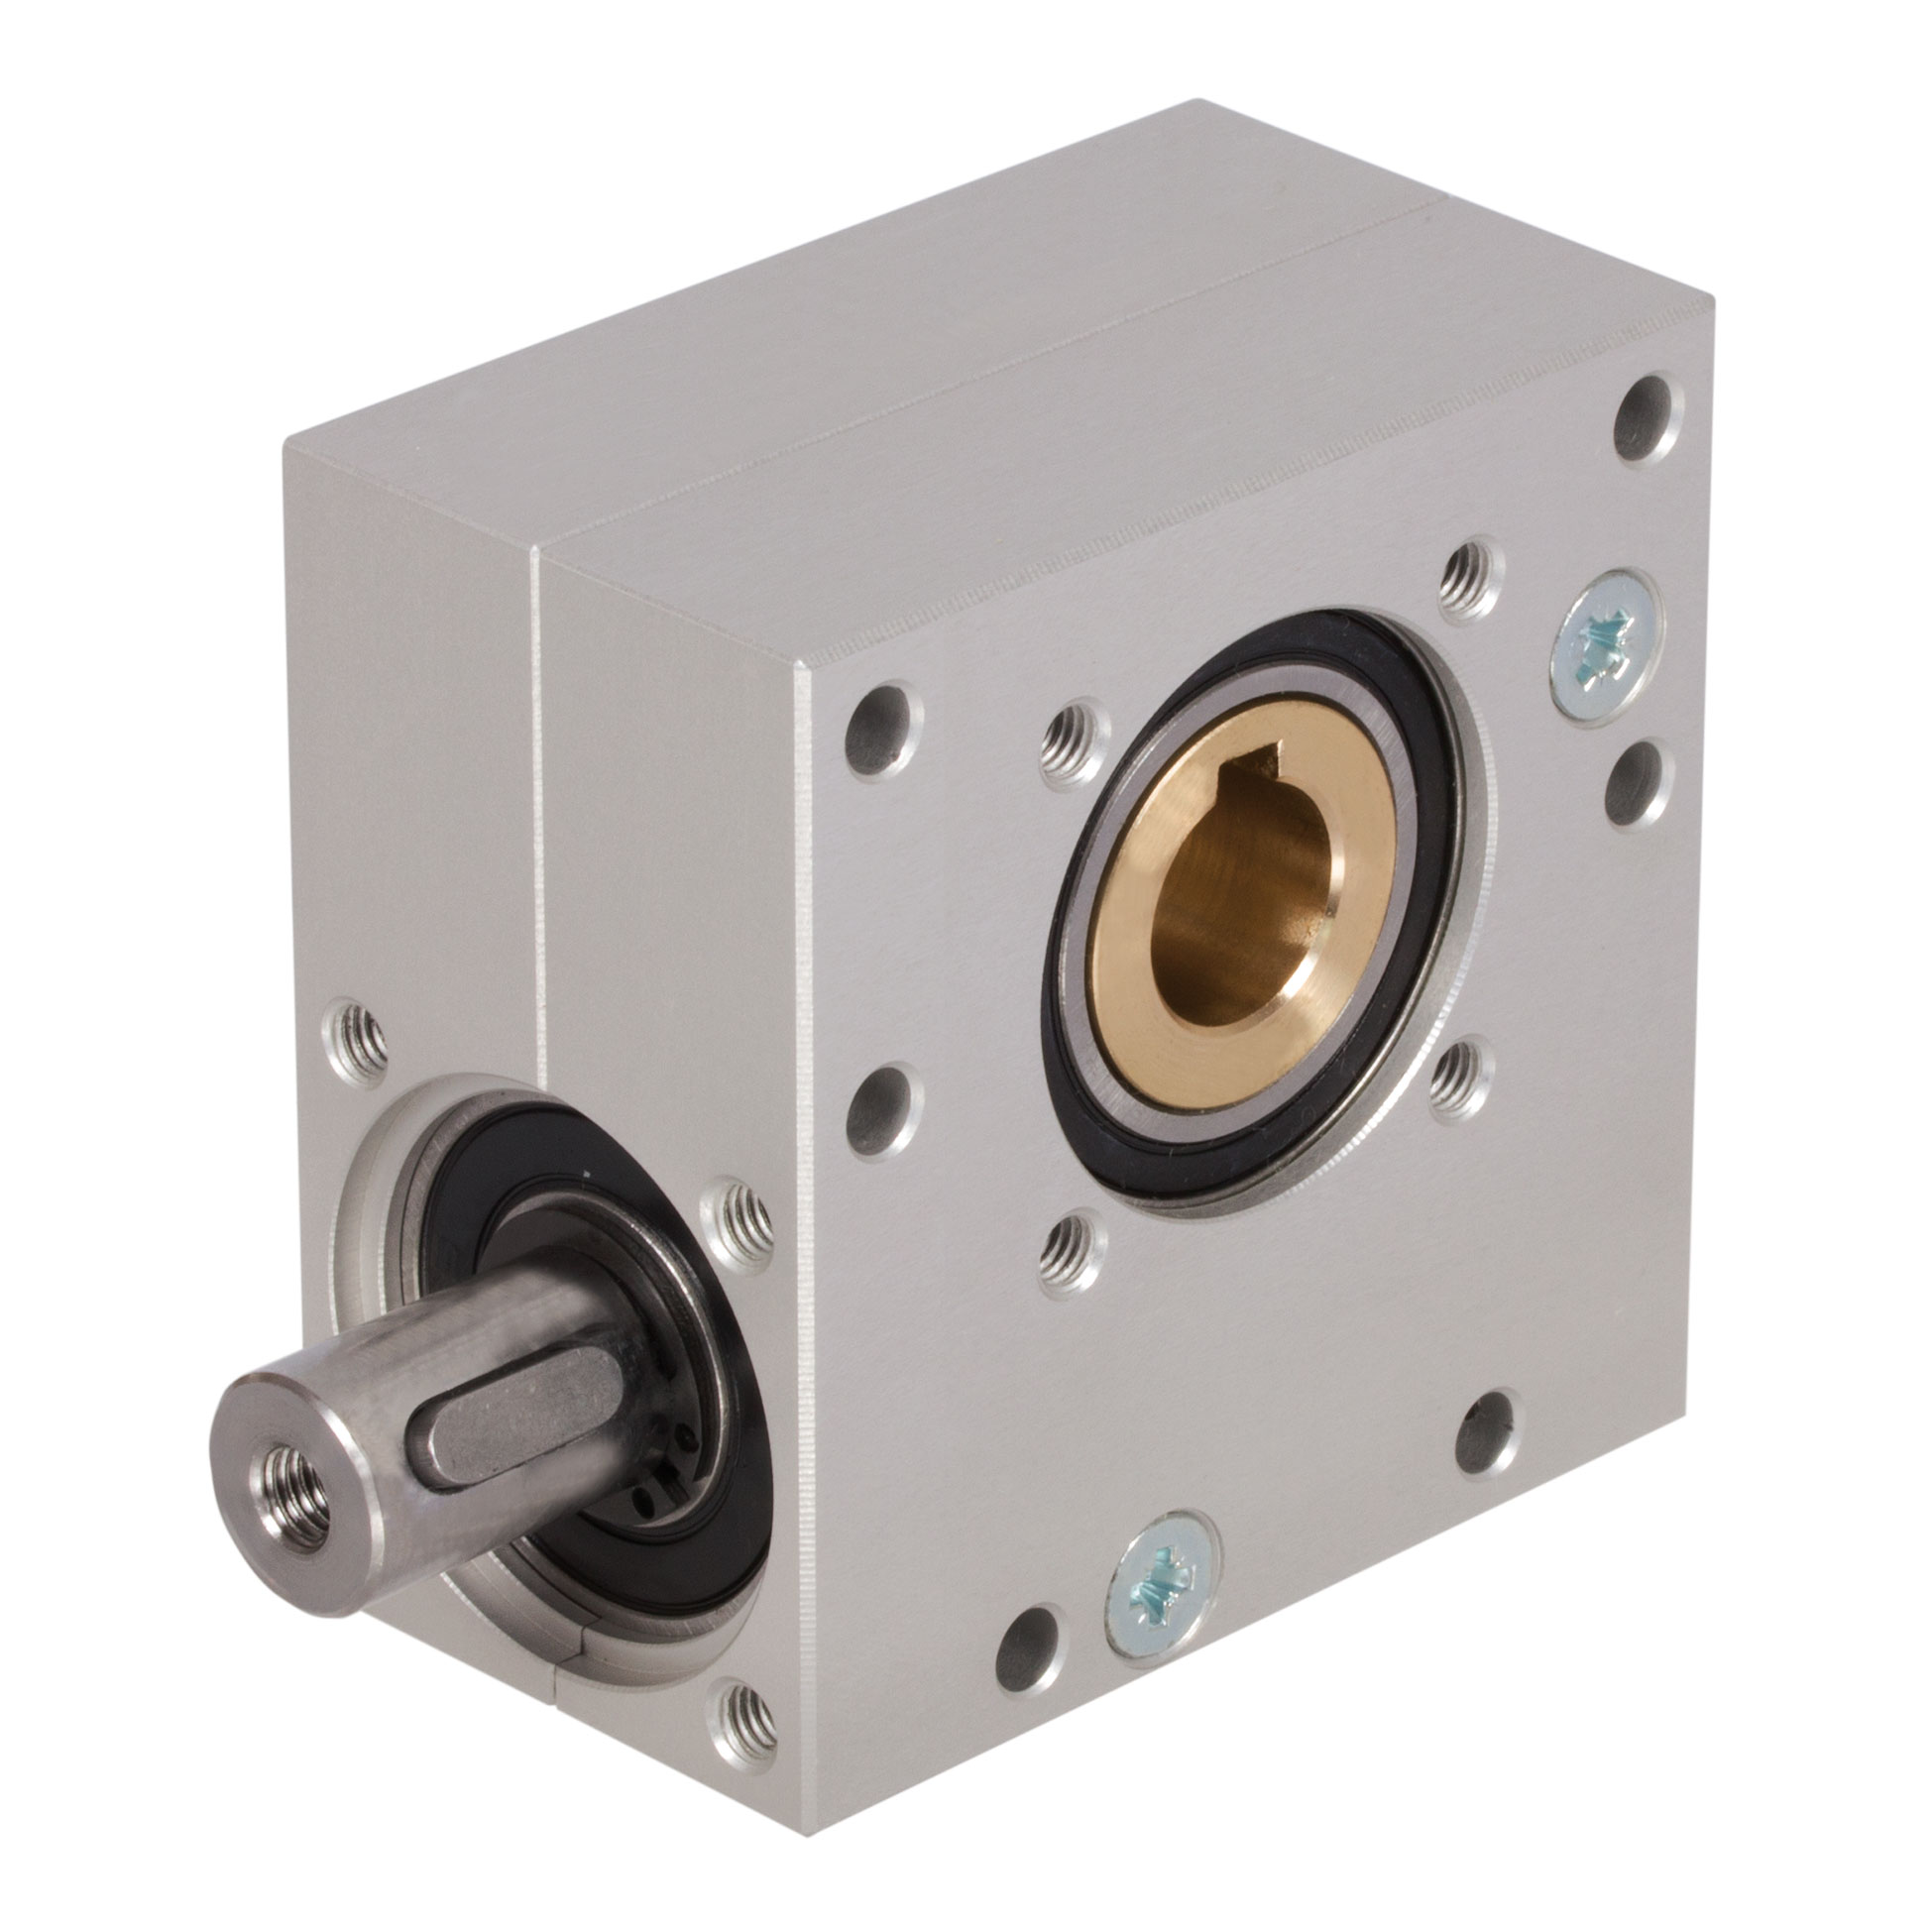 Worm gear unit KES center distance 20mm ratio 30:1 output hollow shaft 12mm  SKU: 42002030 - Maedler North America